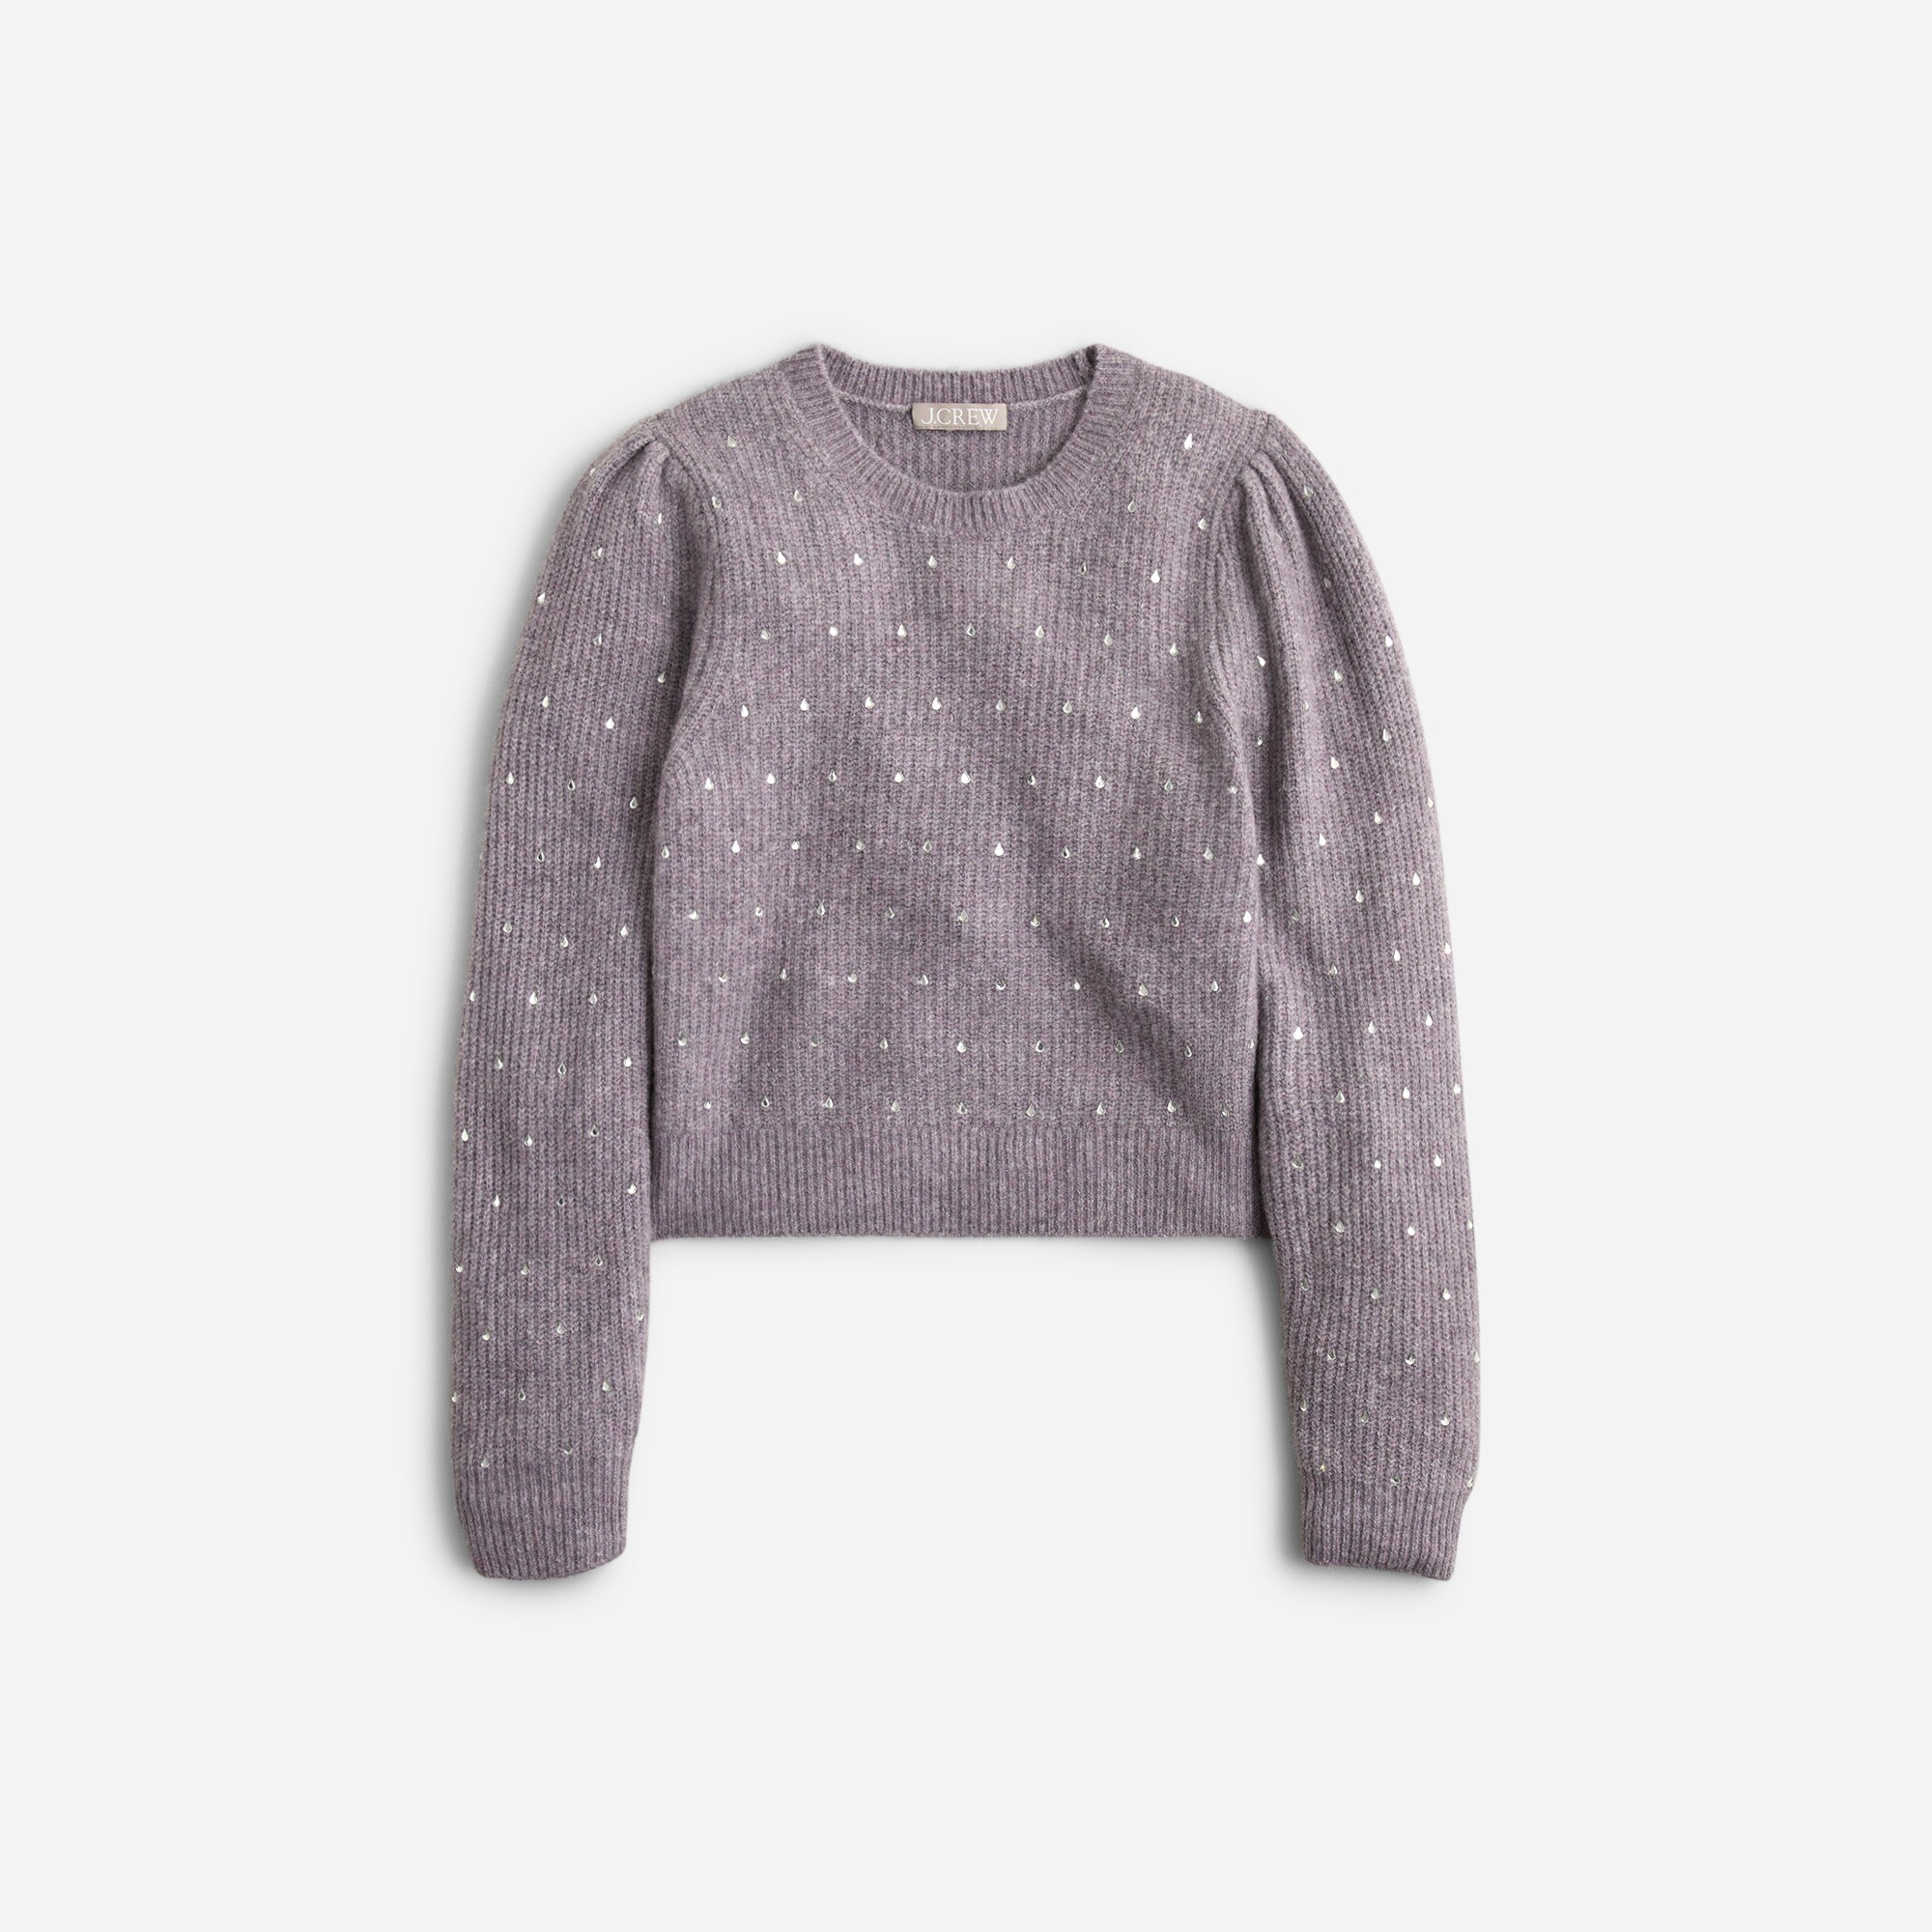  Puff-sleeve rhinestone sweater in Supersoft yarn